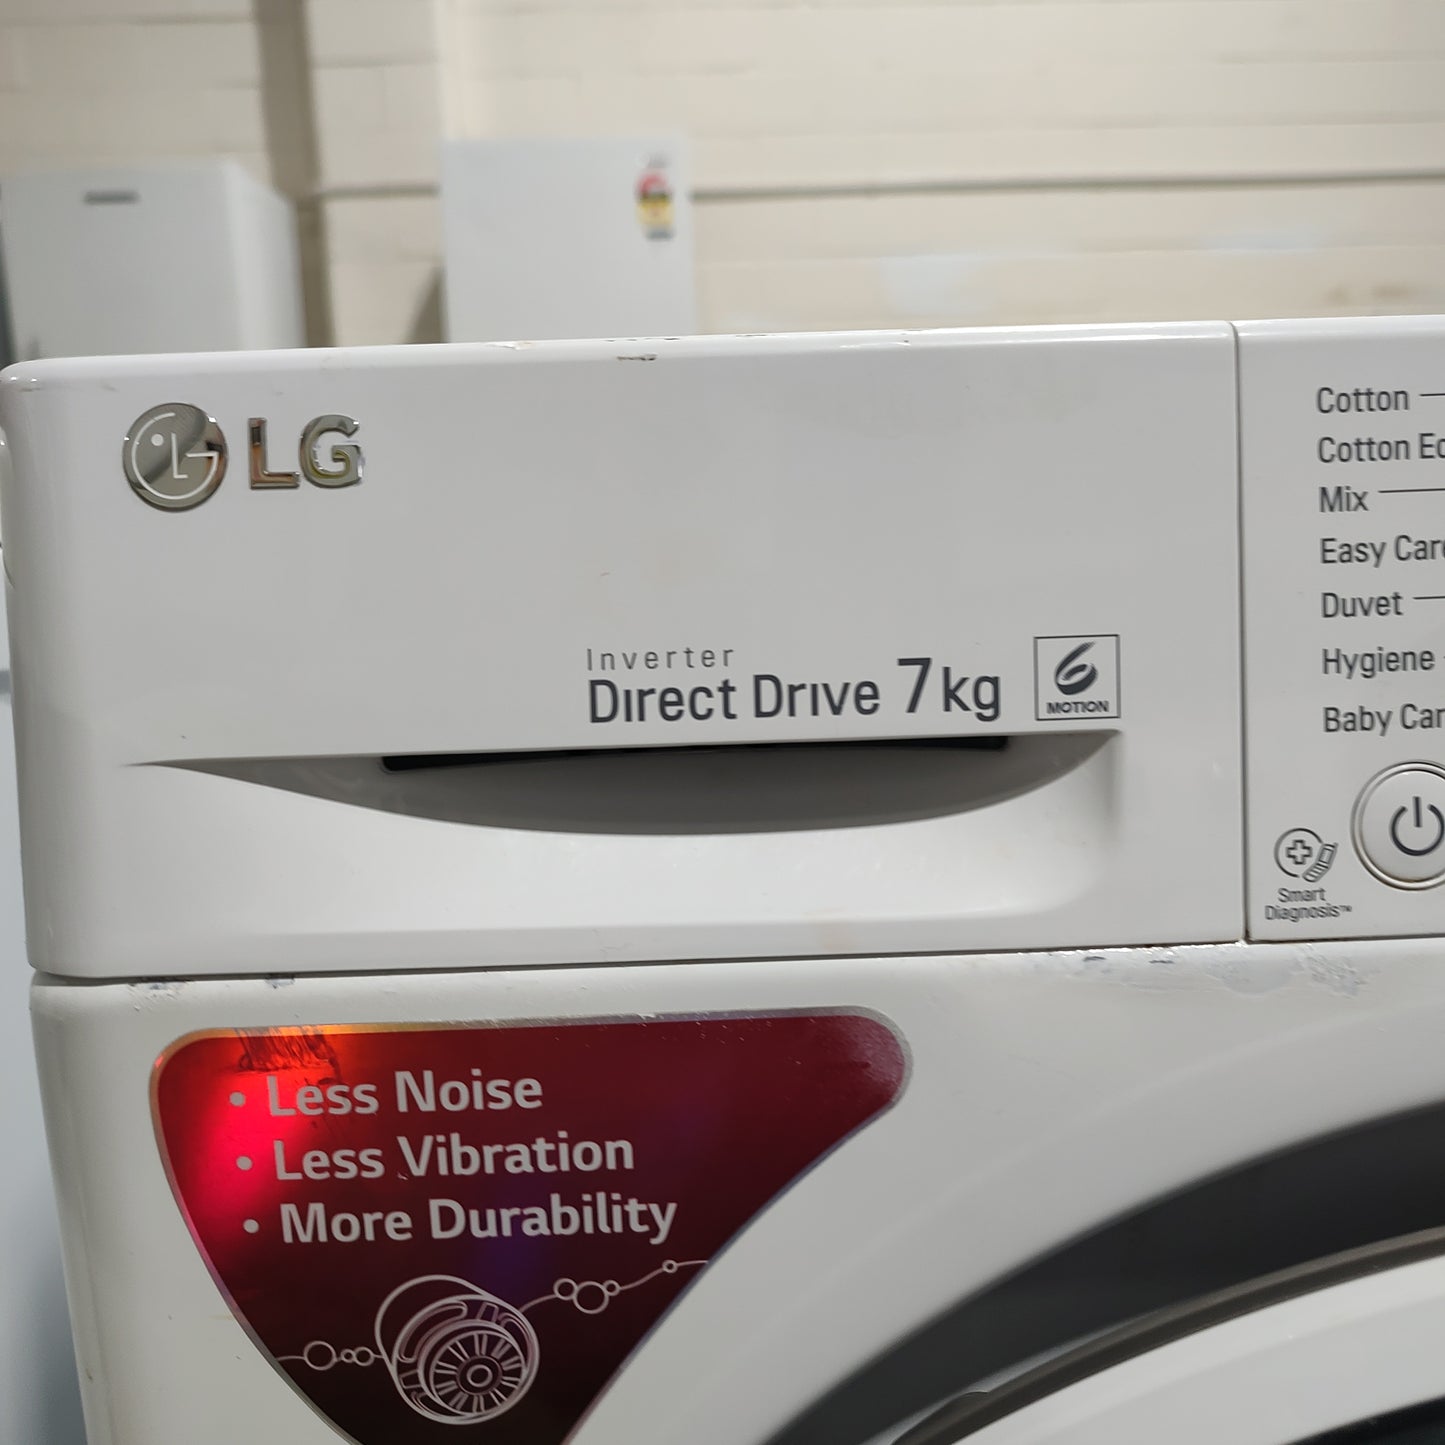 LG WD1207NCW 7kg Front Load Washing Machine